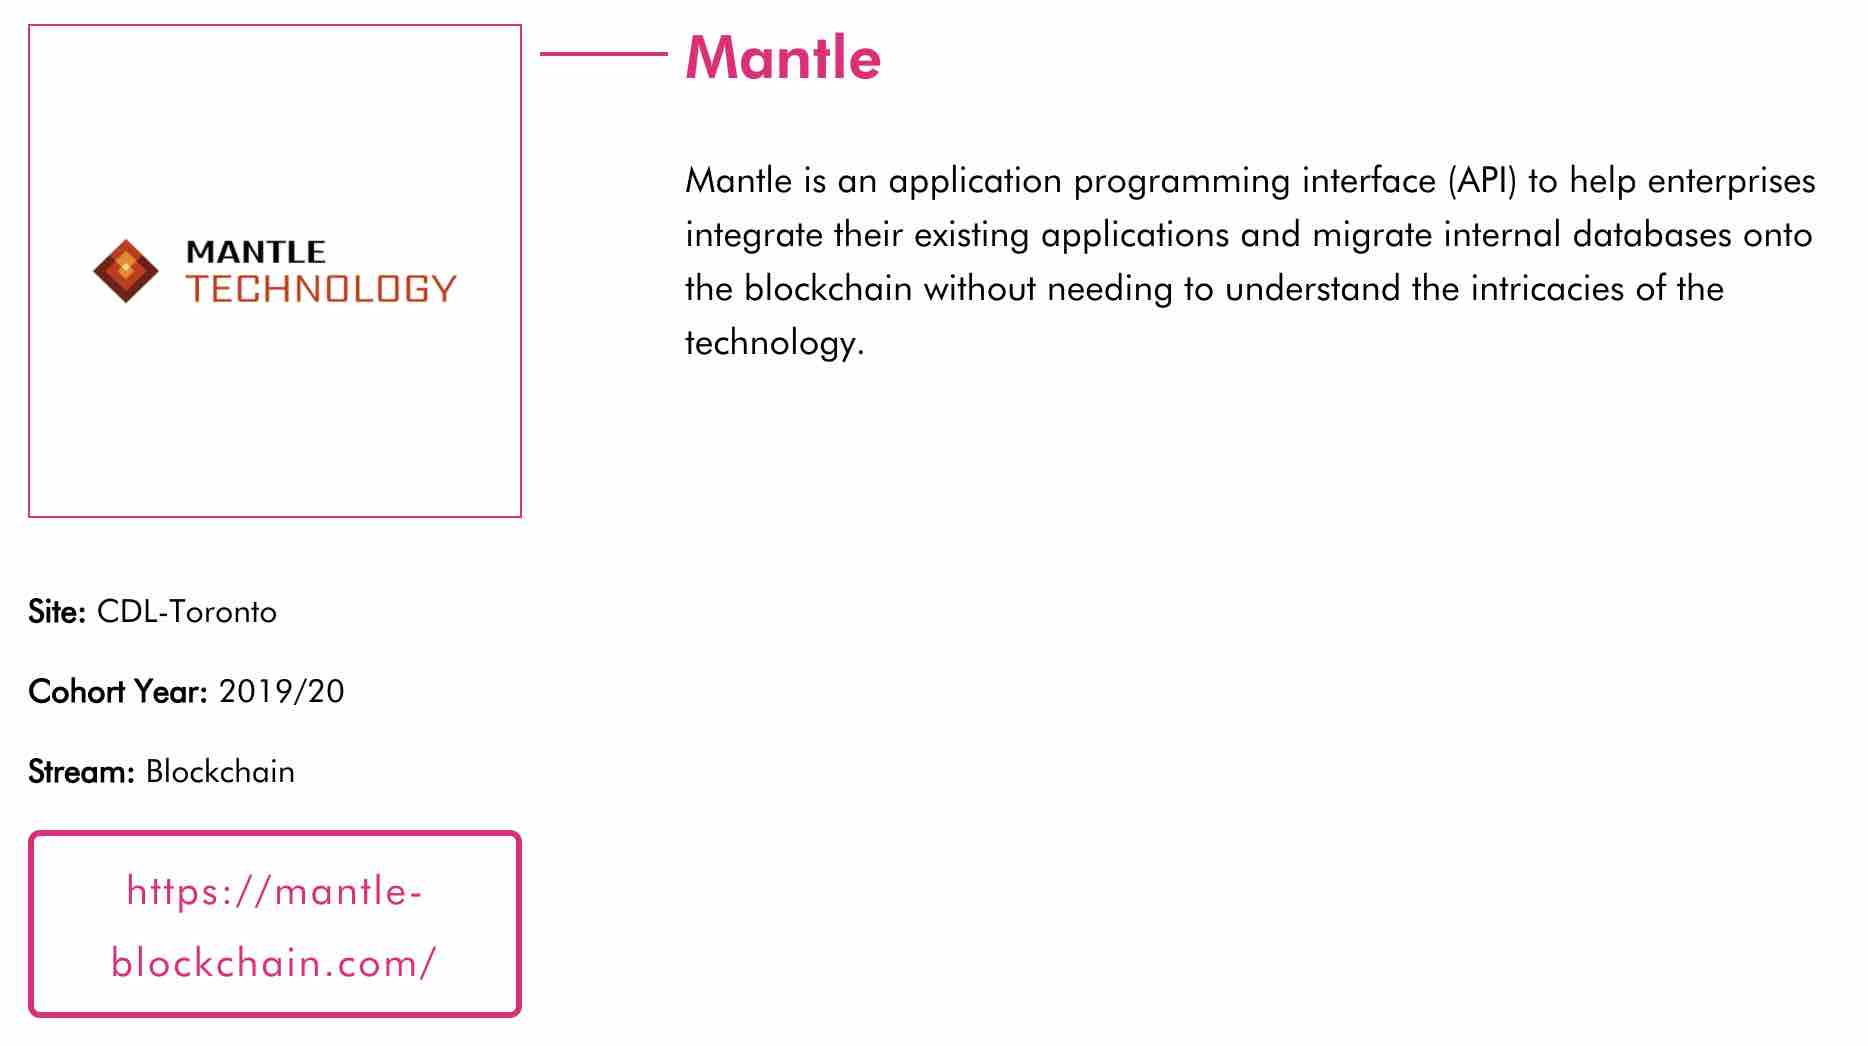 mantle-technologie-au-cdl-de-toronto-en-2019-2020.jpg